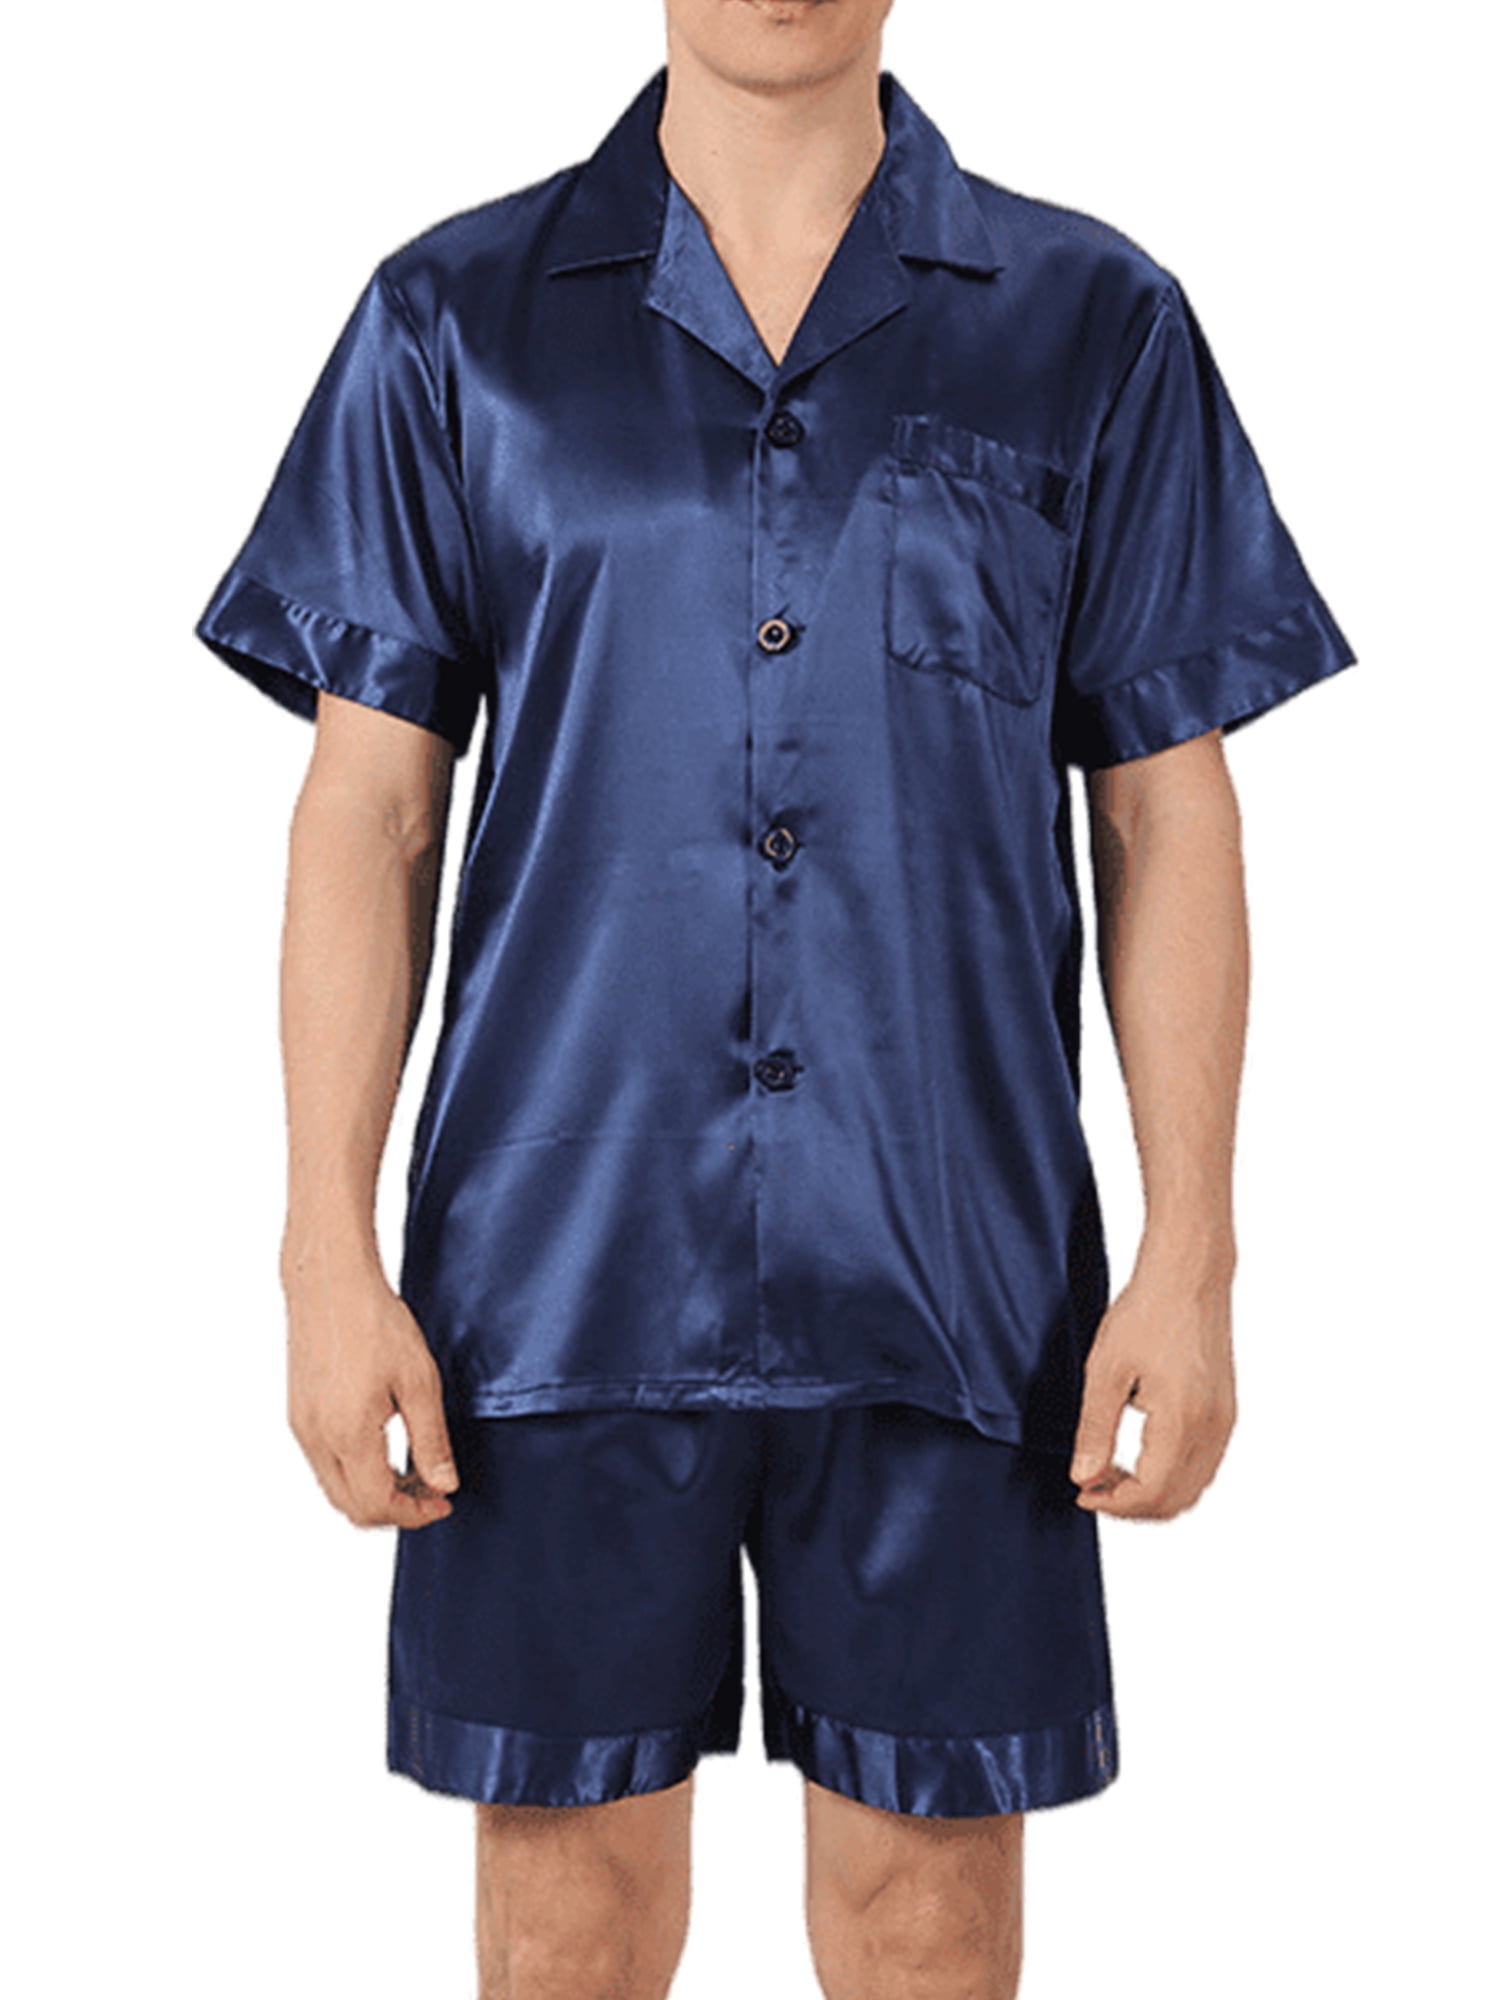 Hanerdun Men Pajamas Set Male Button Nightwear Short Sleeve Sleepwear ...